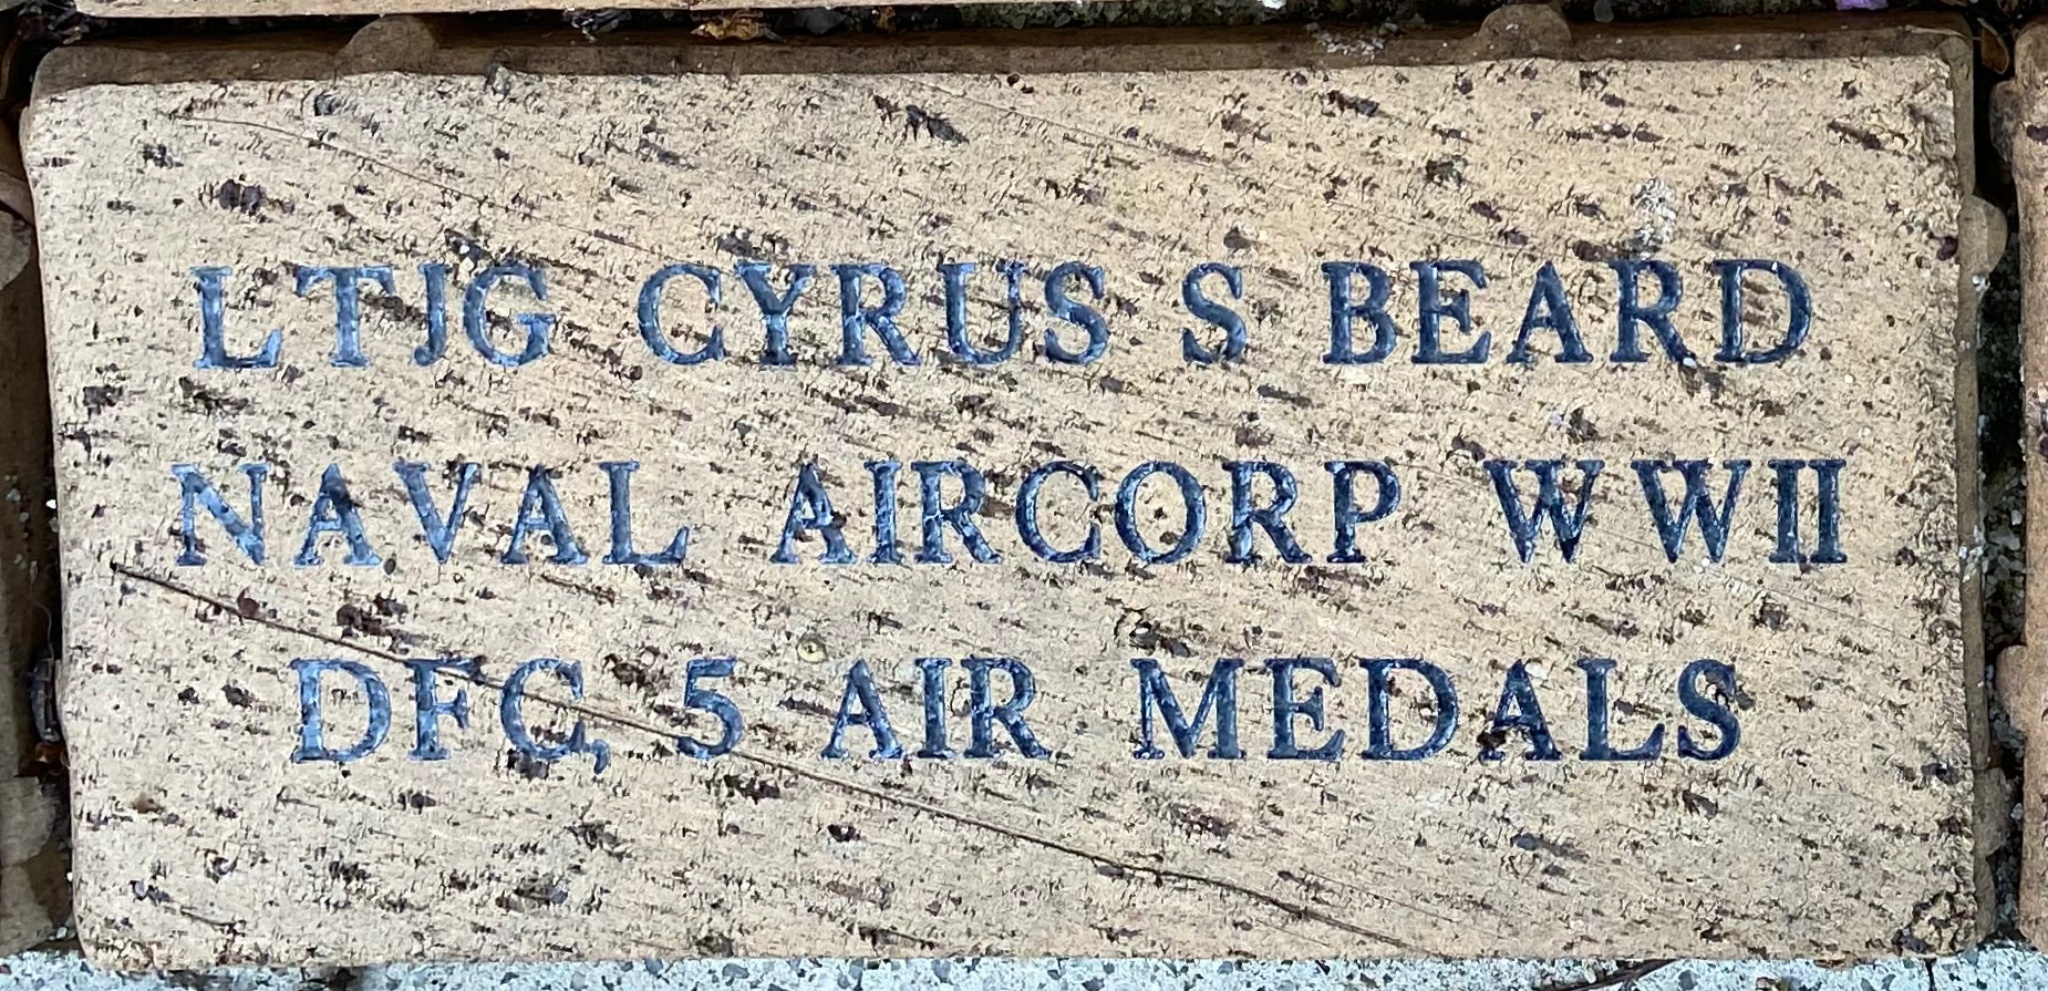 LTJG CYRUS S BEARD NAVAL AIRCORP WWII DFC 5 AIR MEDALS